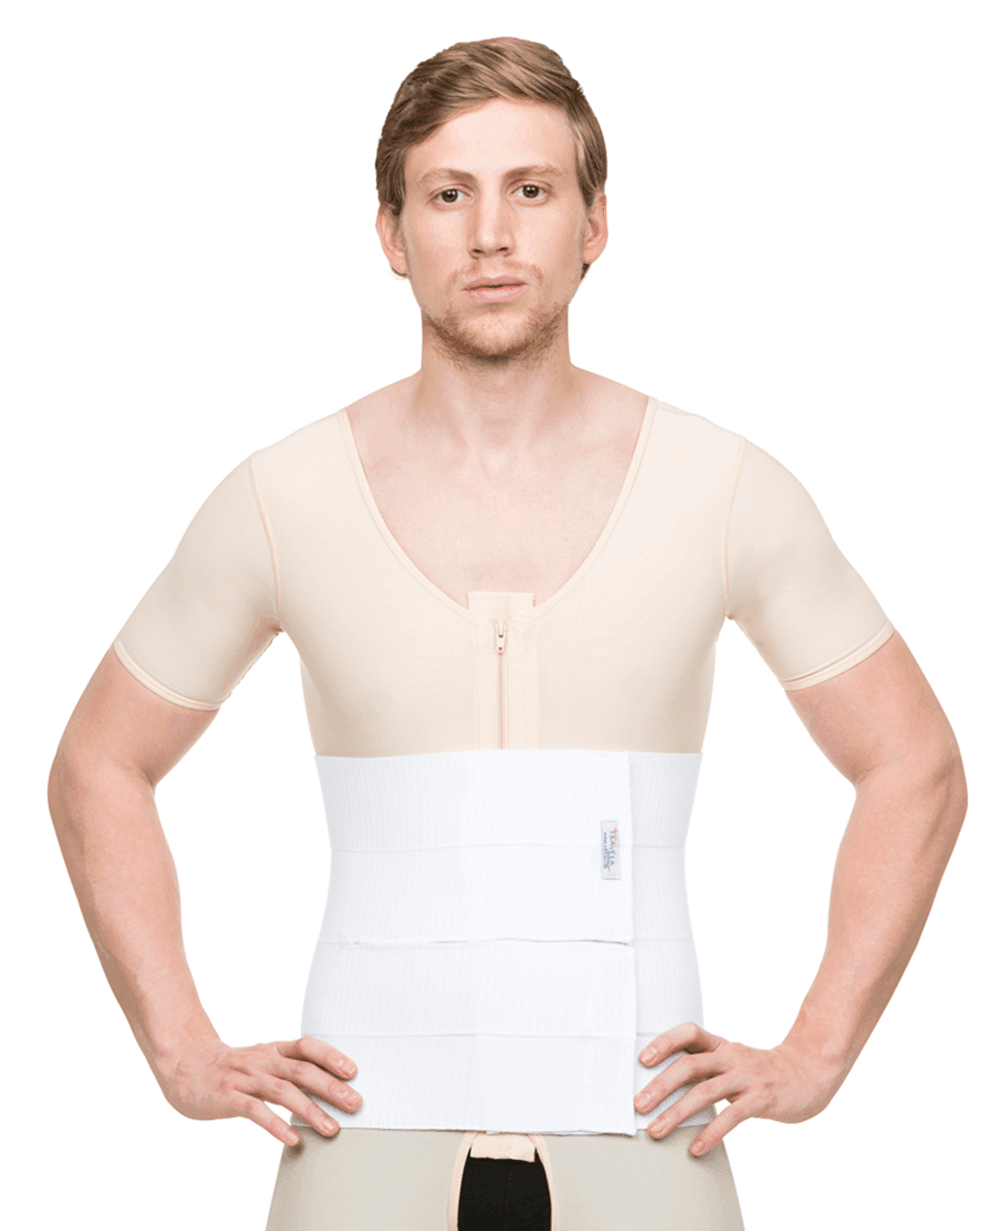 Q&A: Abdominal binder, compression garment after Tummy Tuck